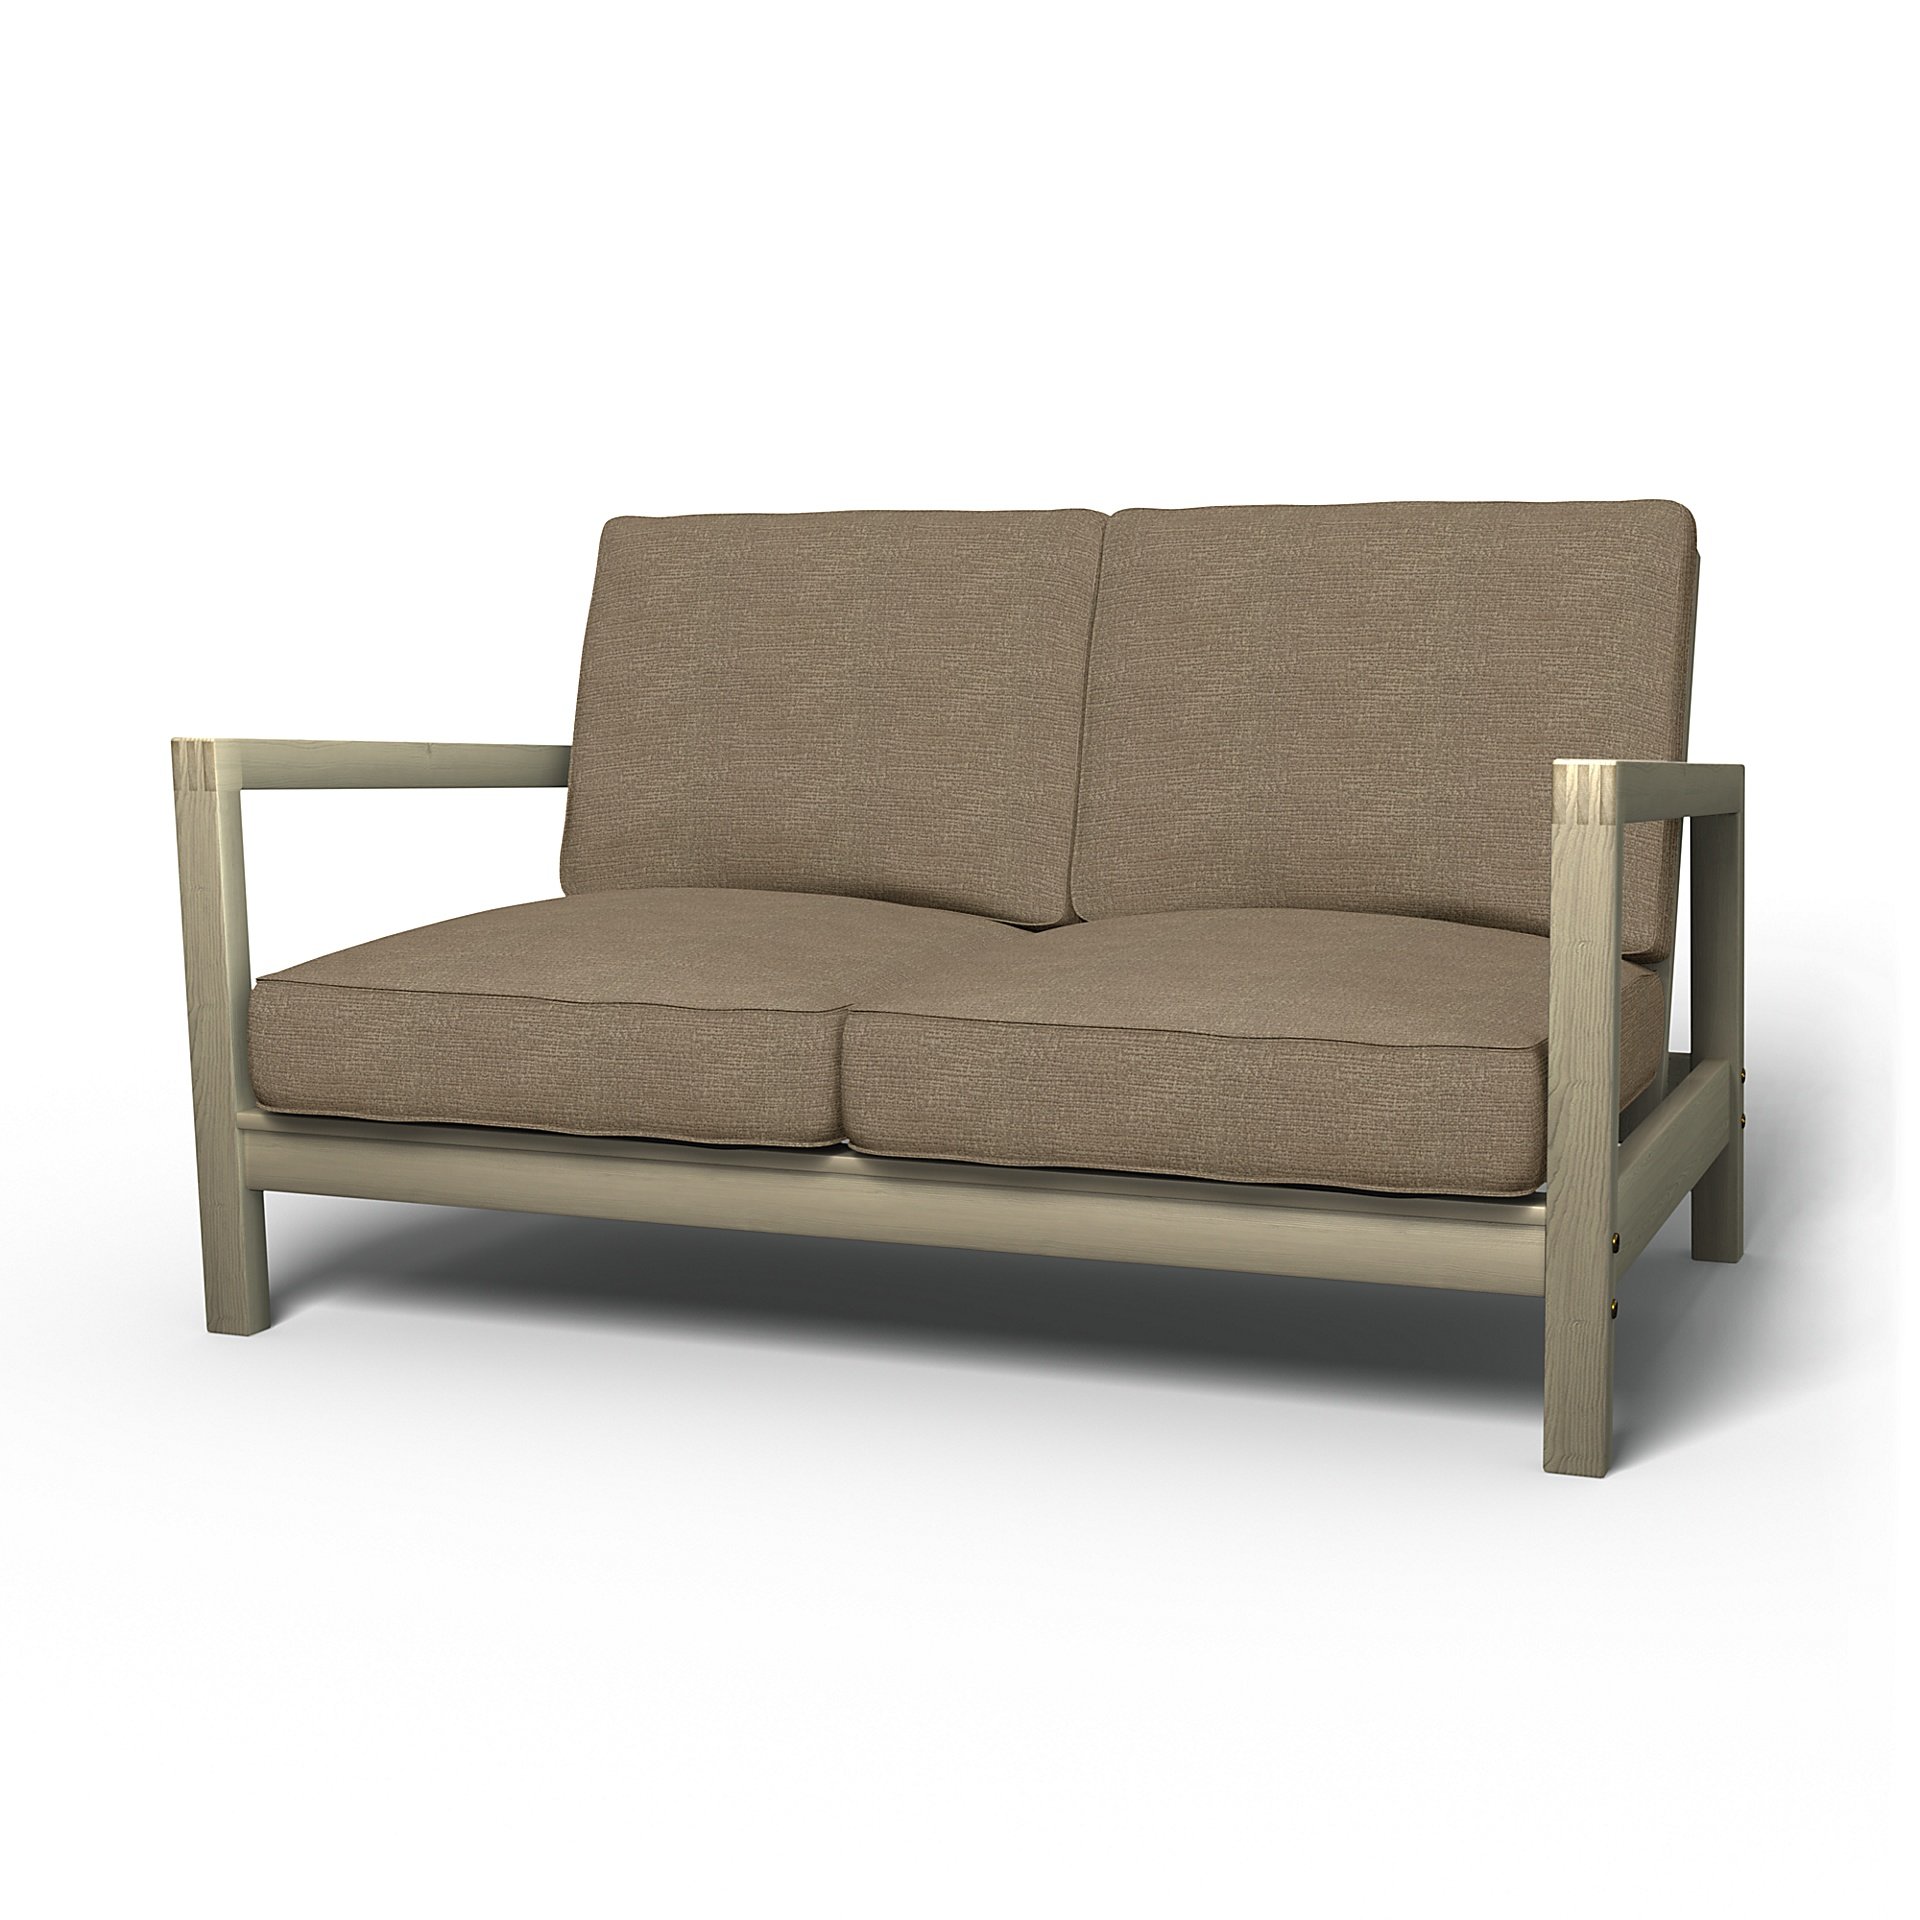 IKEA - Lillberg 2 Seater Sofa Cover, Camel, Boucle & Texture - Bemz